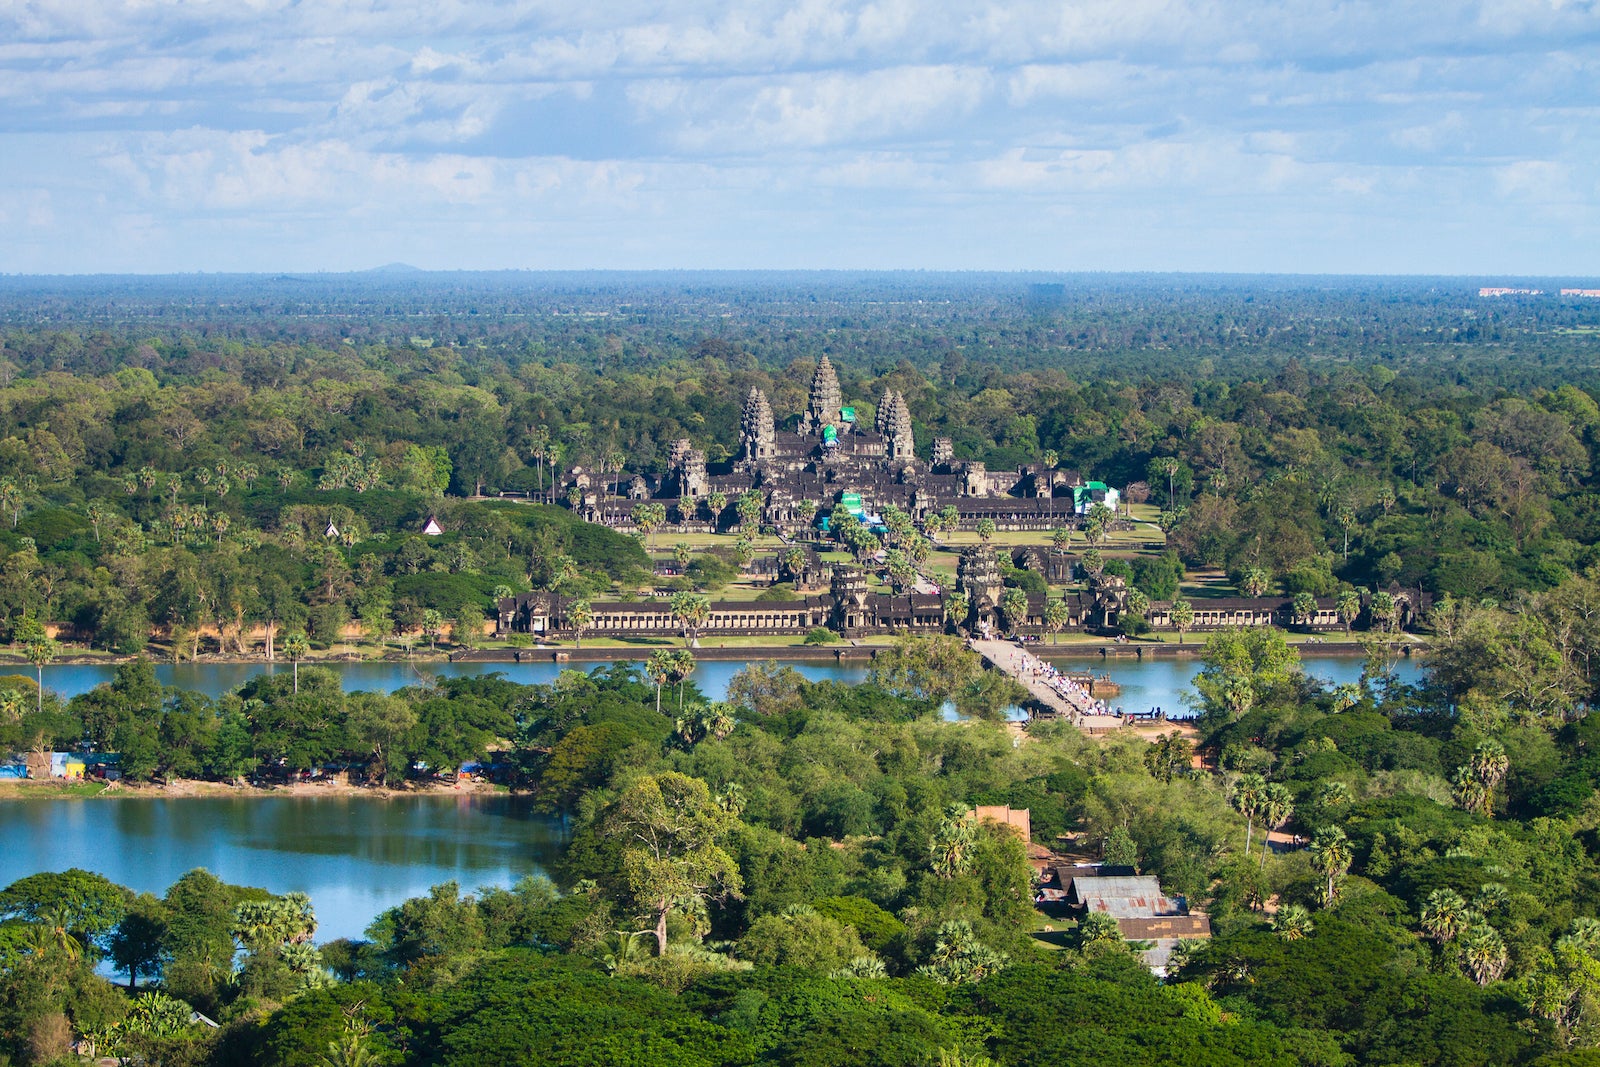 Aerial views over the ruins of Angkor Wat